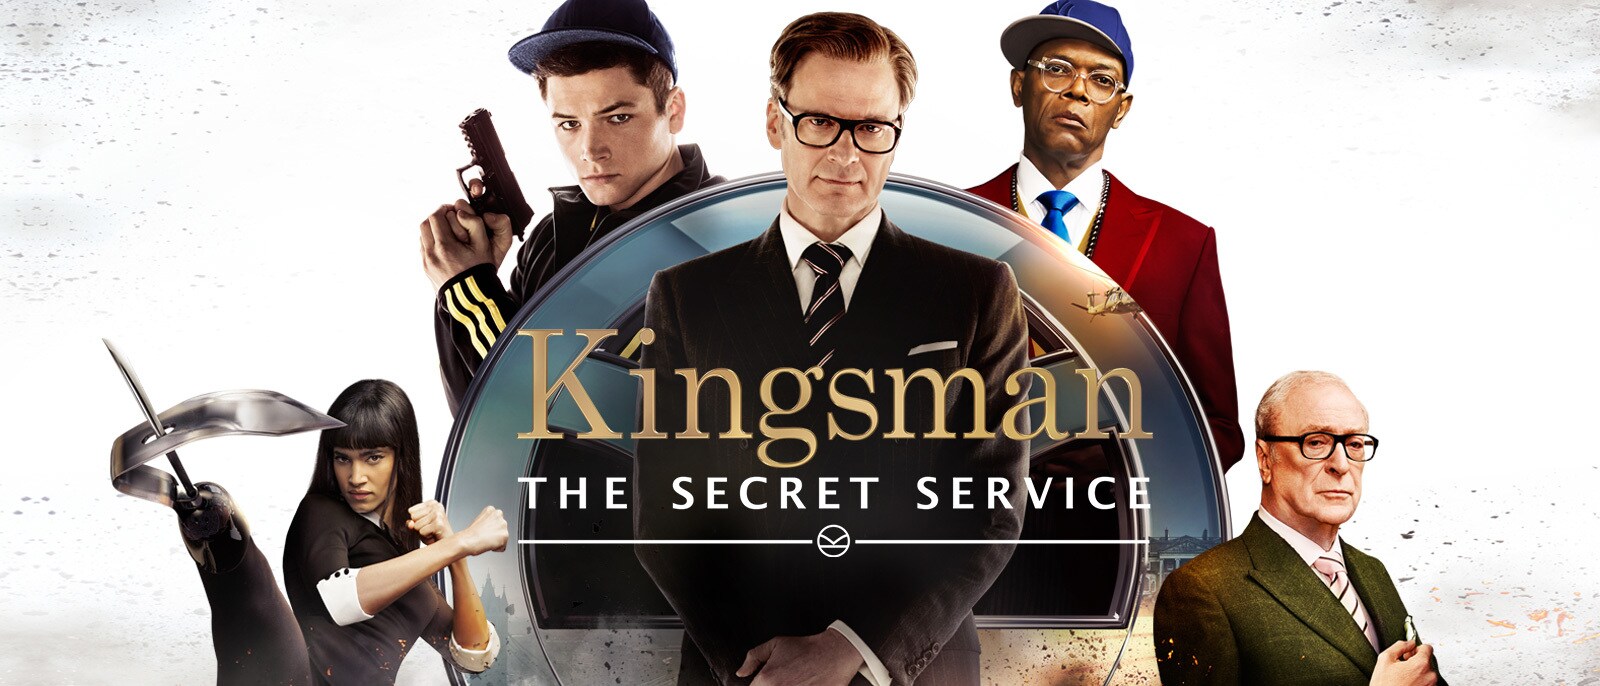 watch kingsman 2 for free online